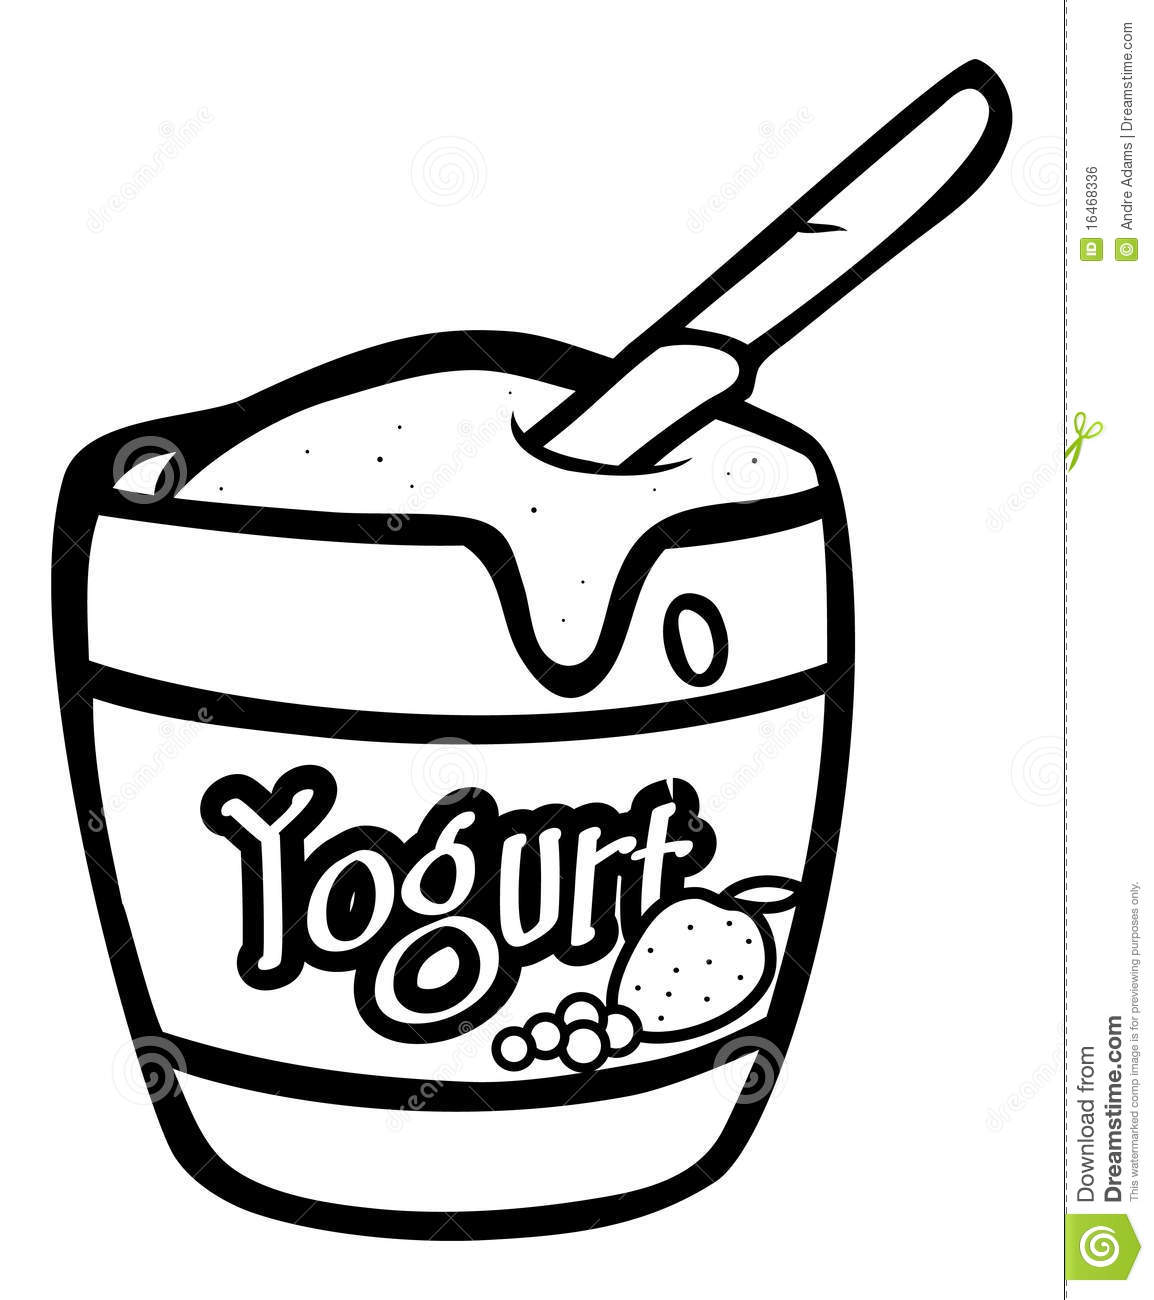 Yogurt Outline Royalty Free Stock Image   Image  16468336